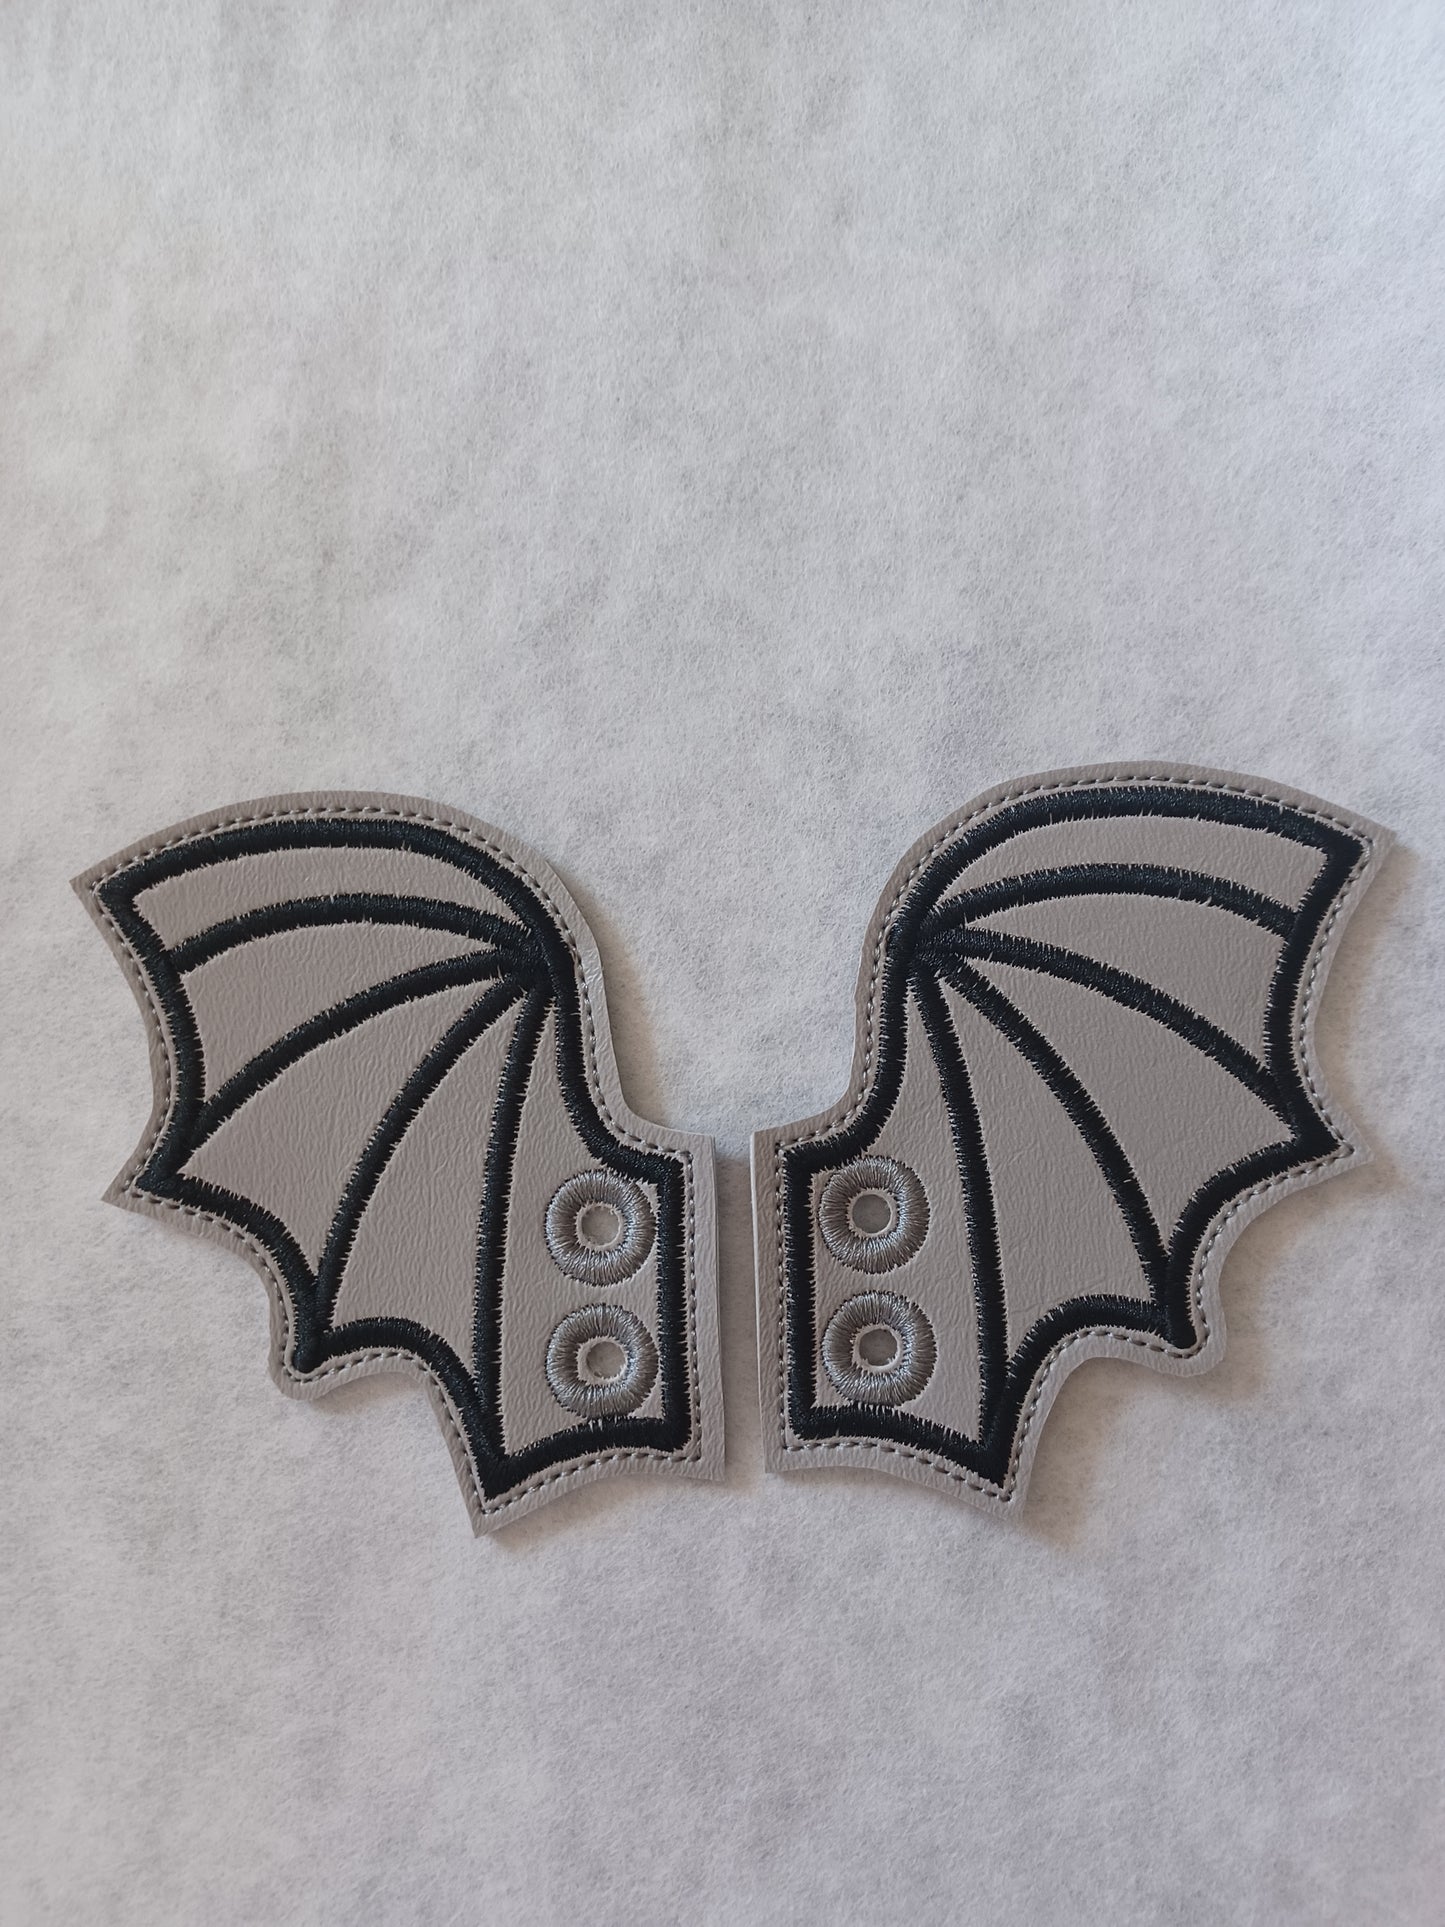 Bat Wings Shoe / Boot Wings